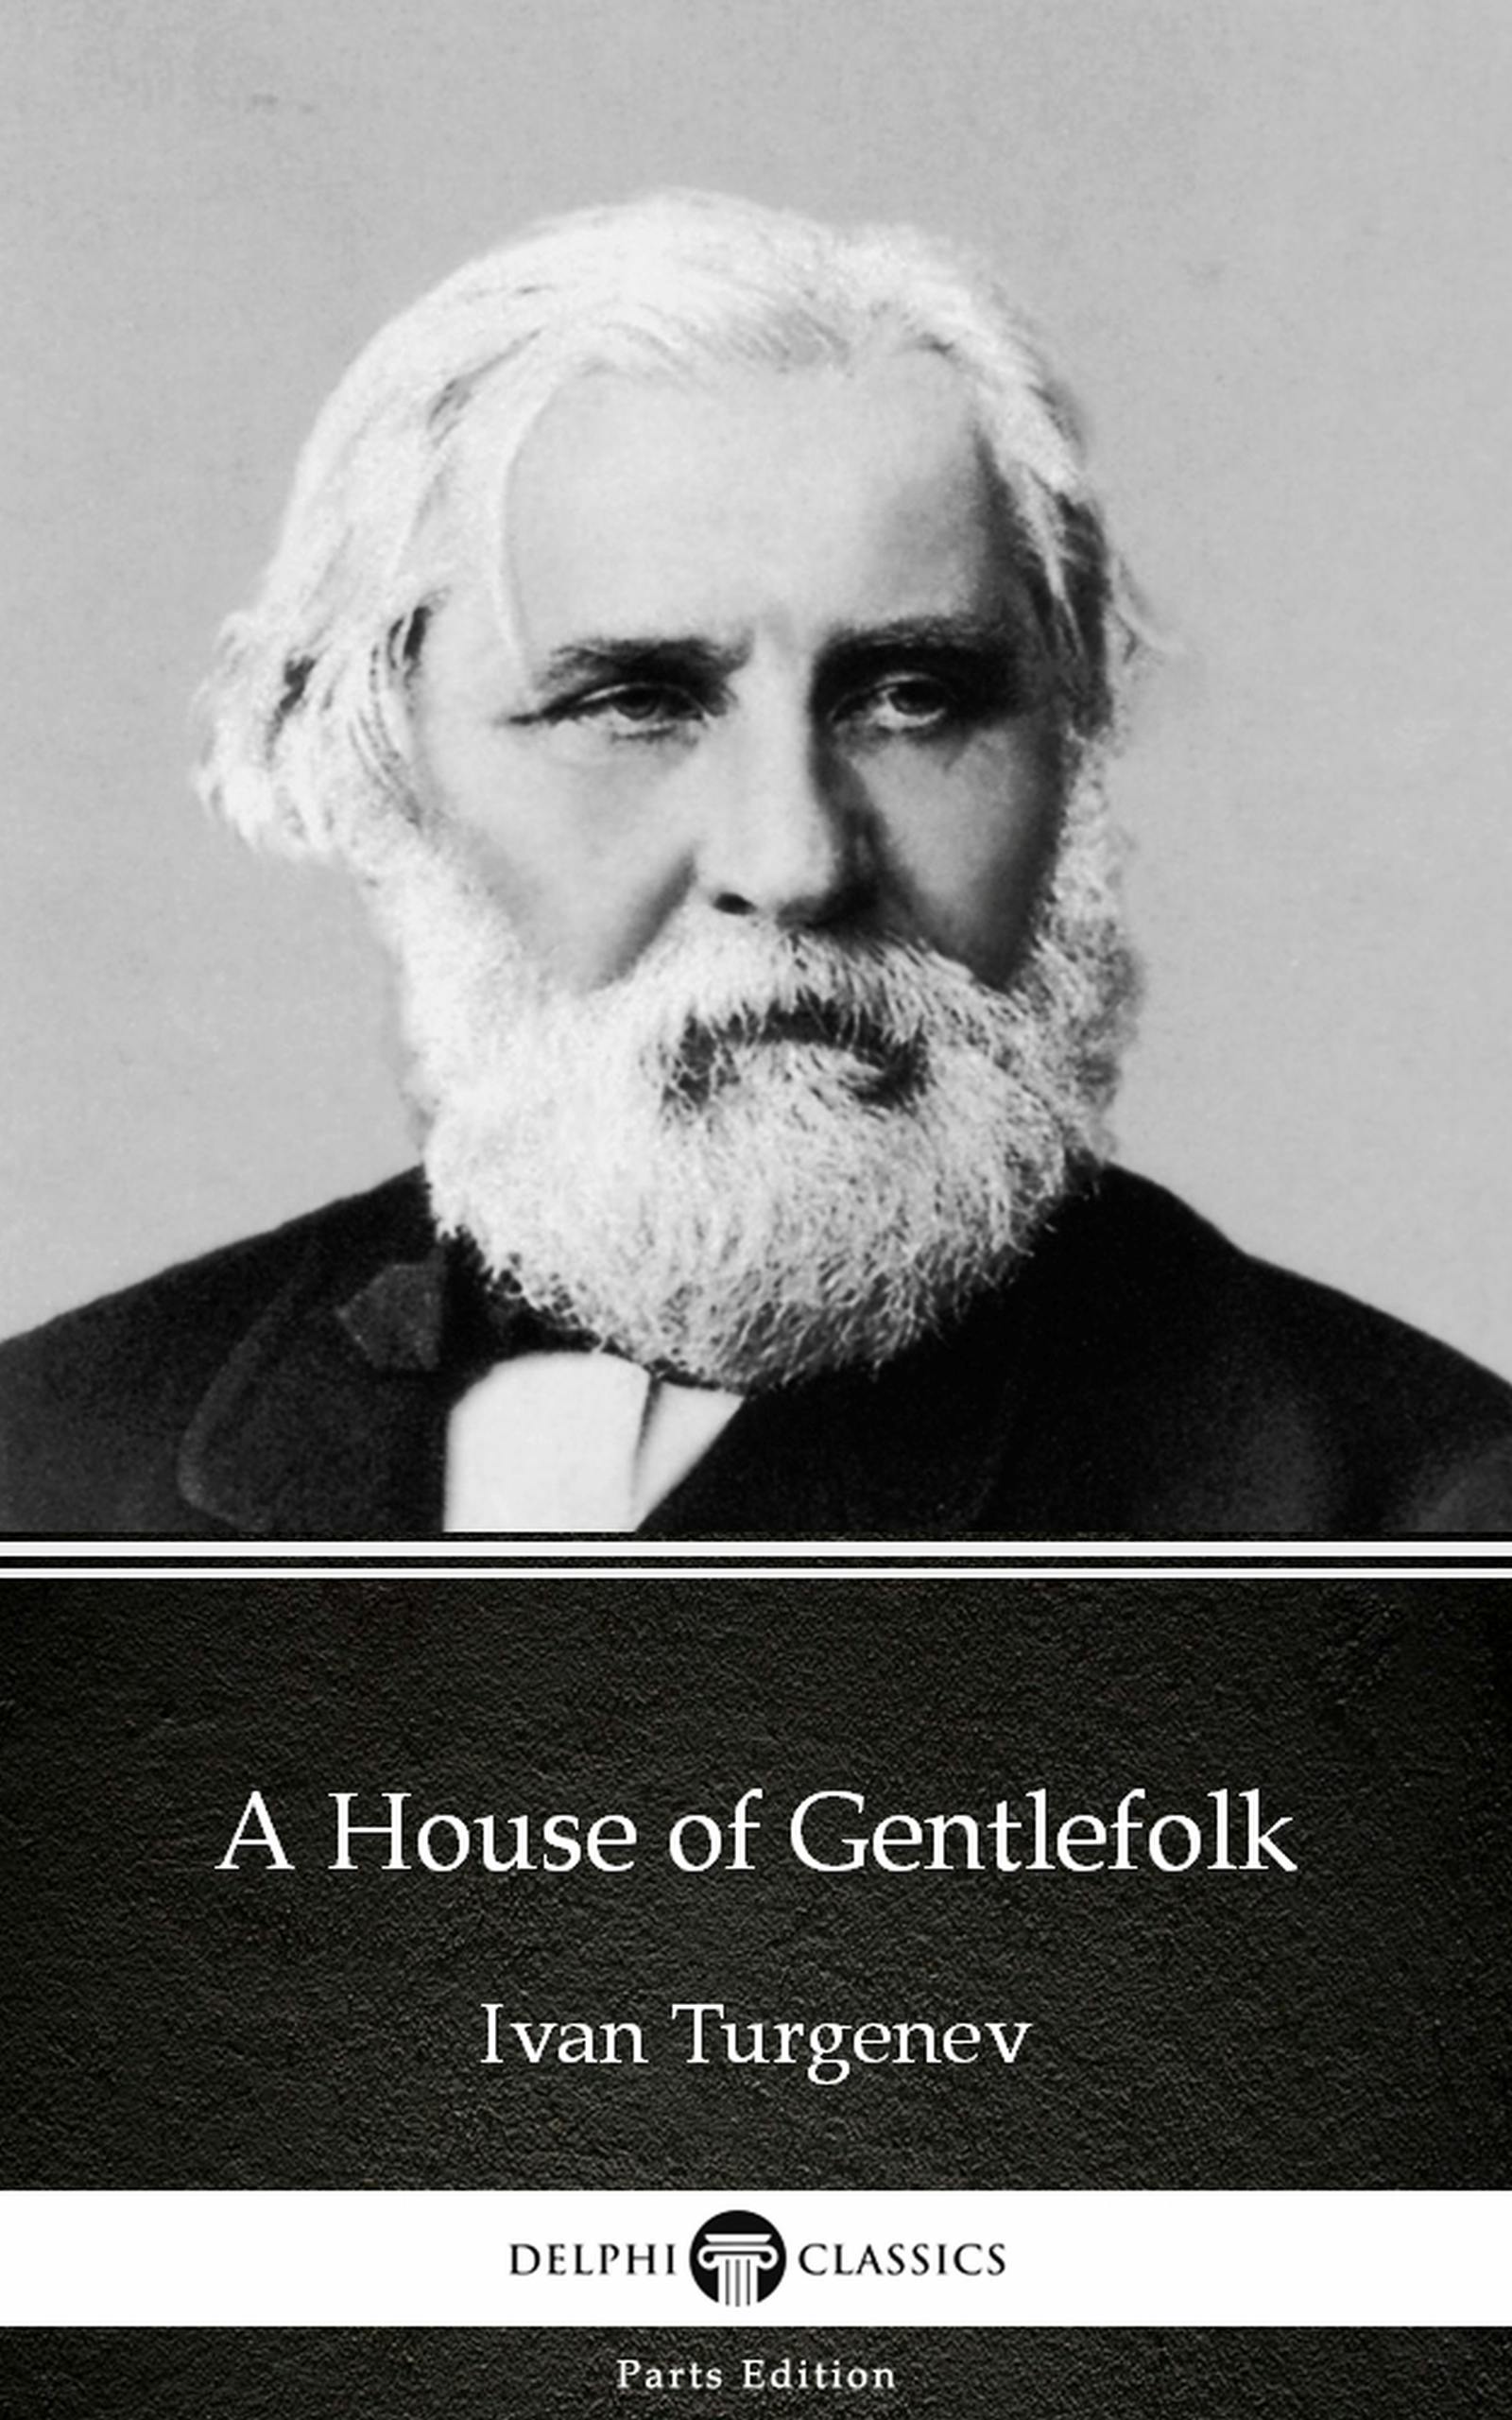 A House of Gentlefolk by Ivan Turgenev - Delphi Classics (Illustrated) - Ivan Turgenev